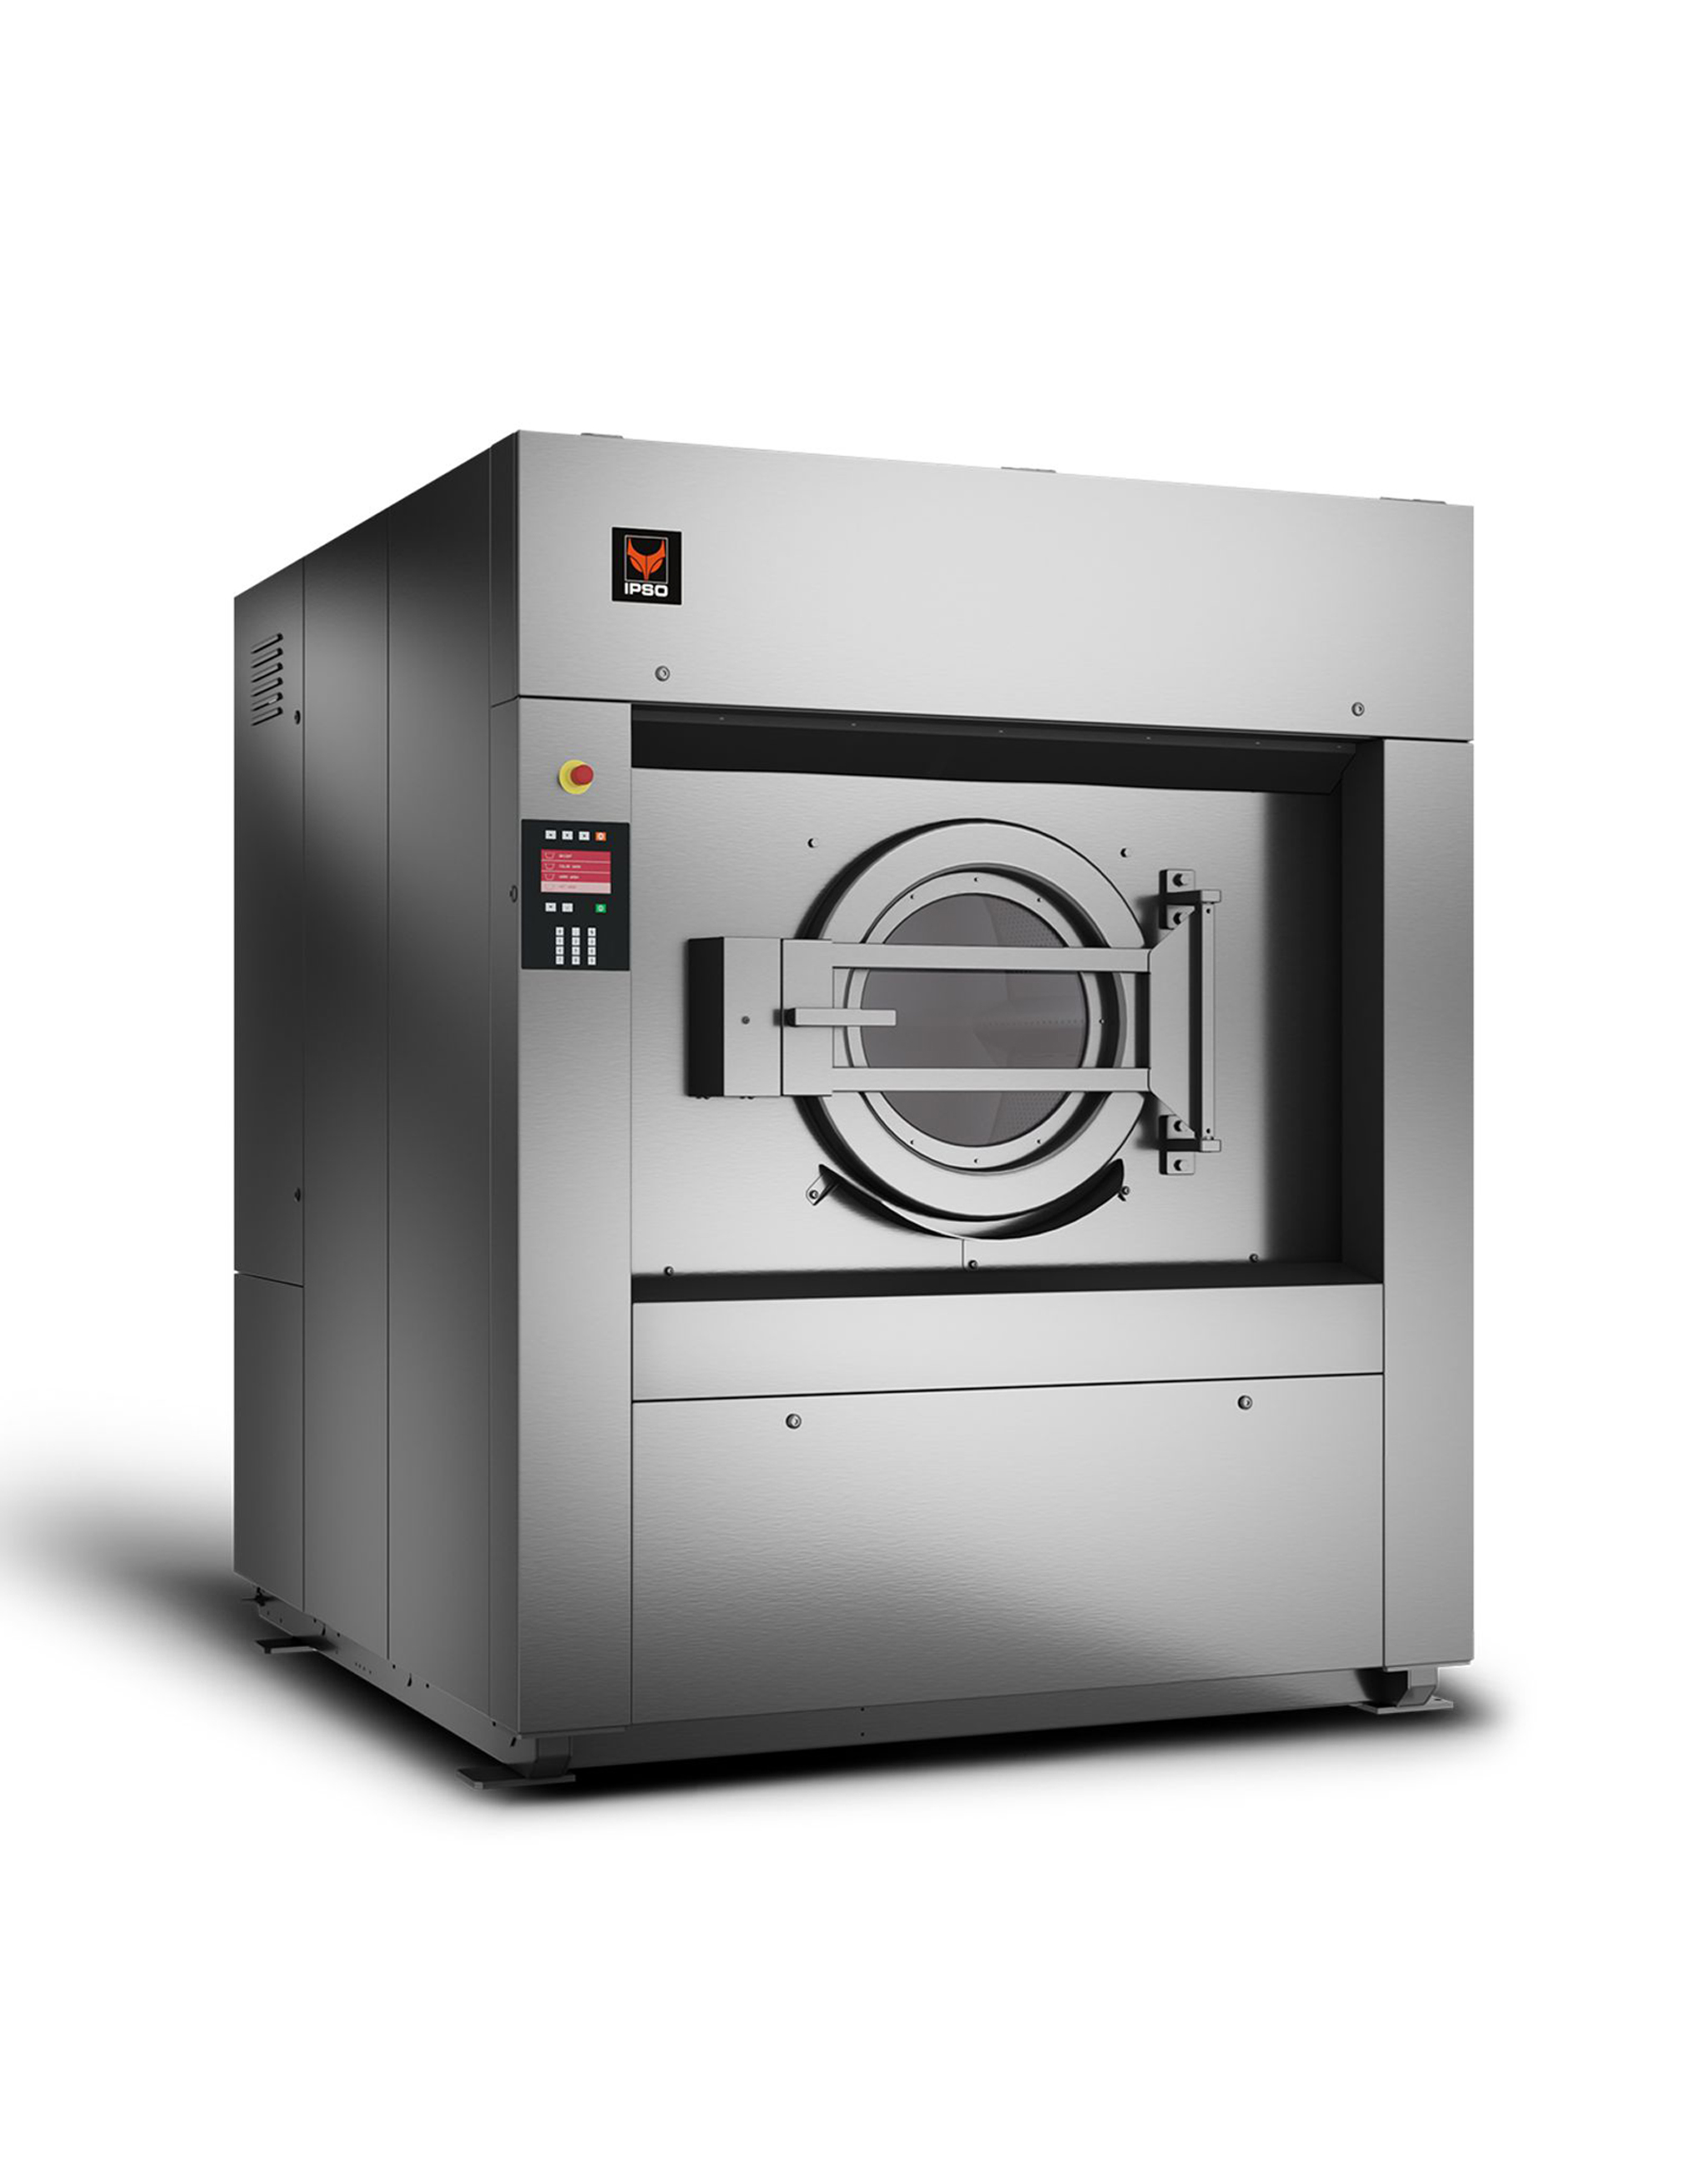 IY800-links-industriele-wasmachine-machine-à-laver-industriel-800-kilo-kg-industrial